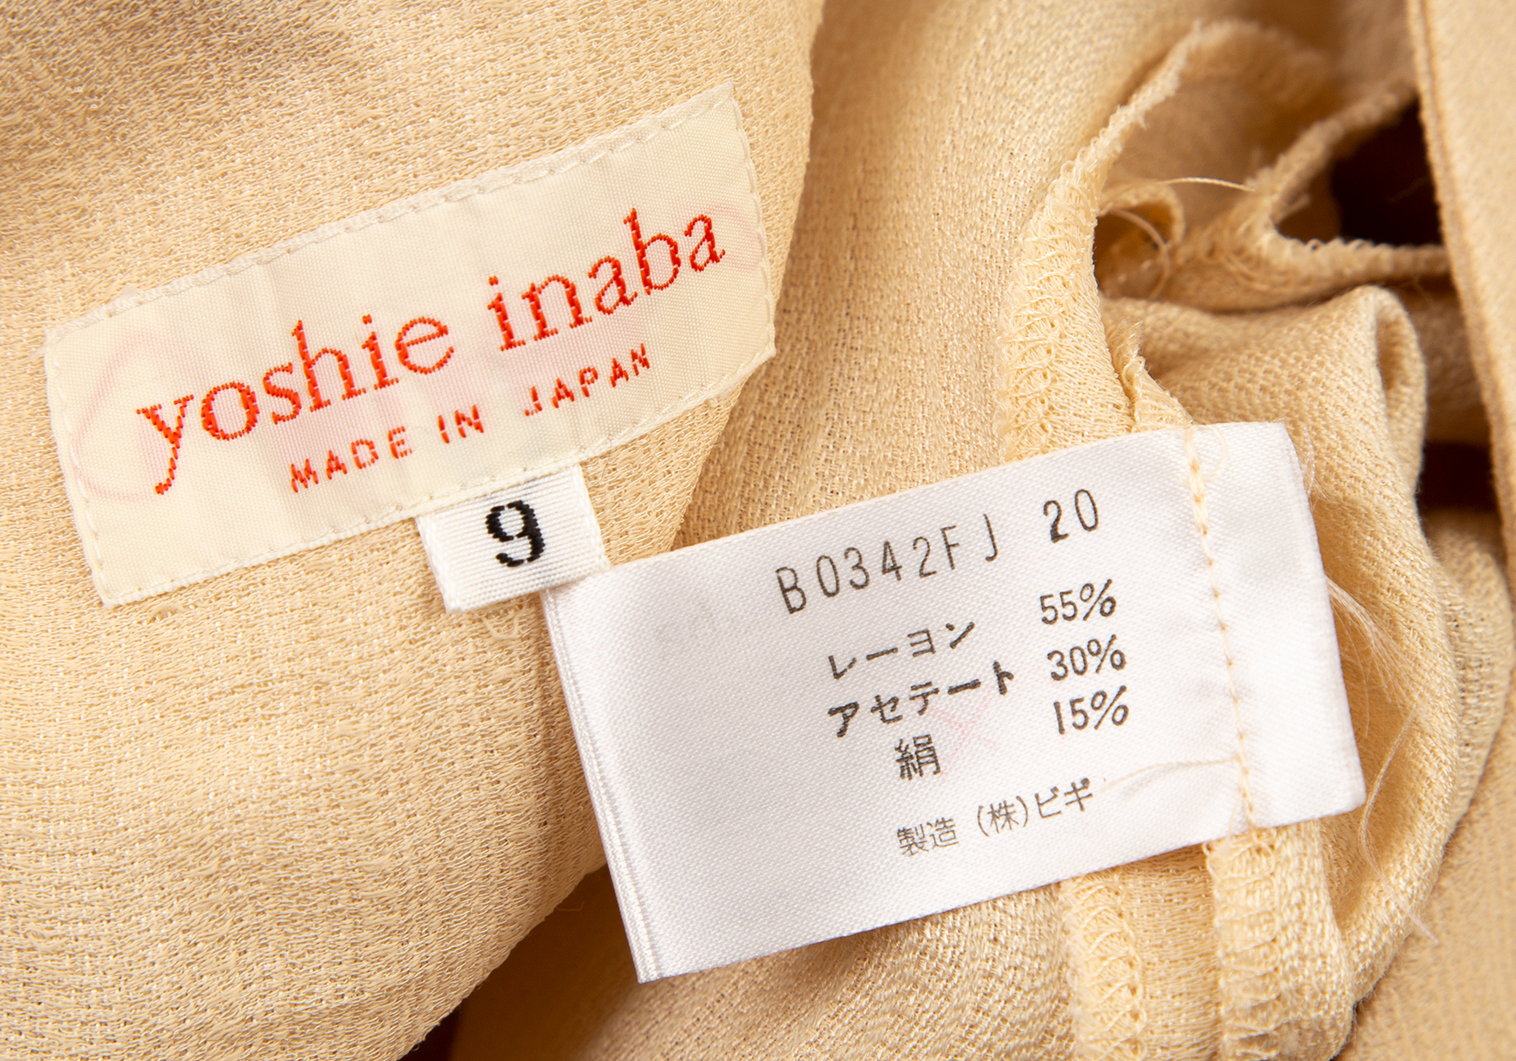 yoshie inaba ヨシエイナバ シルクニットワンピース スカーフ 11y_clothing